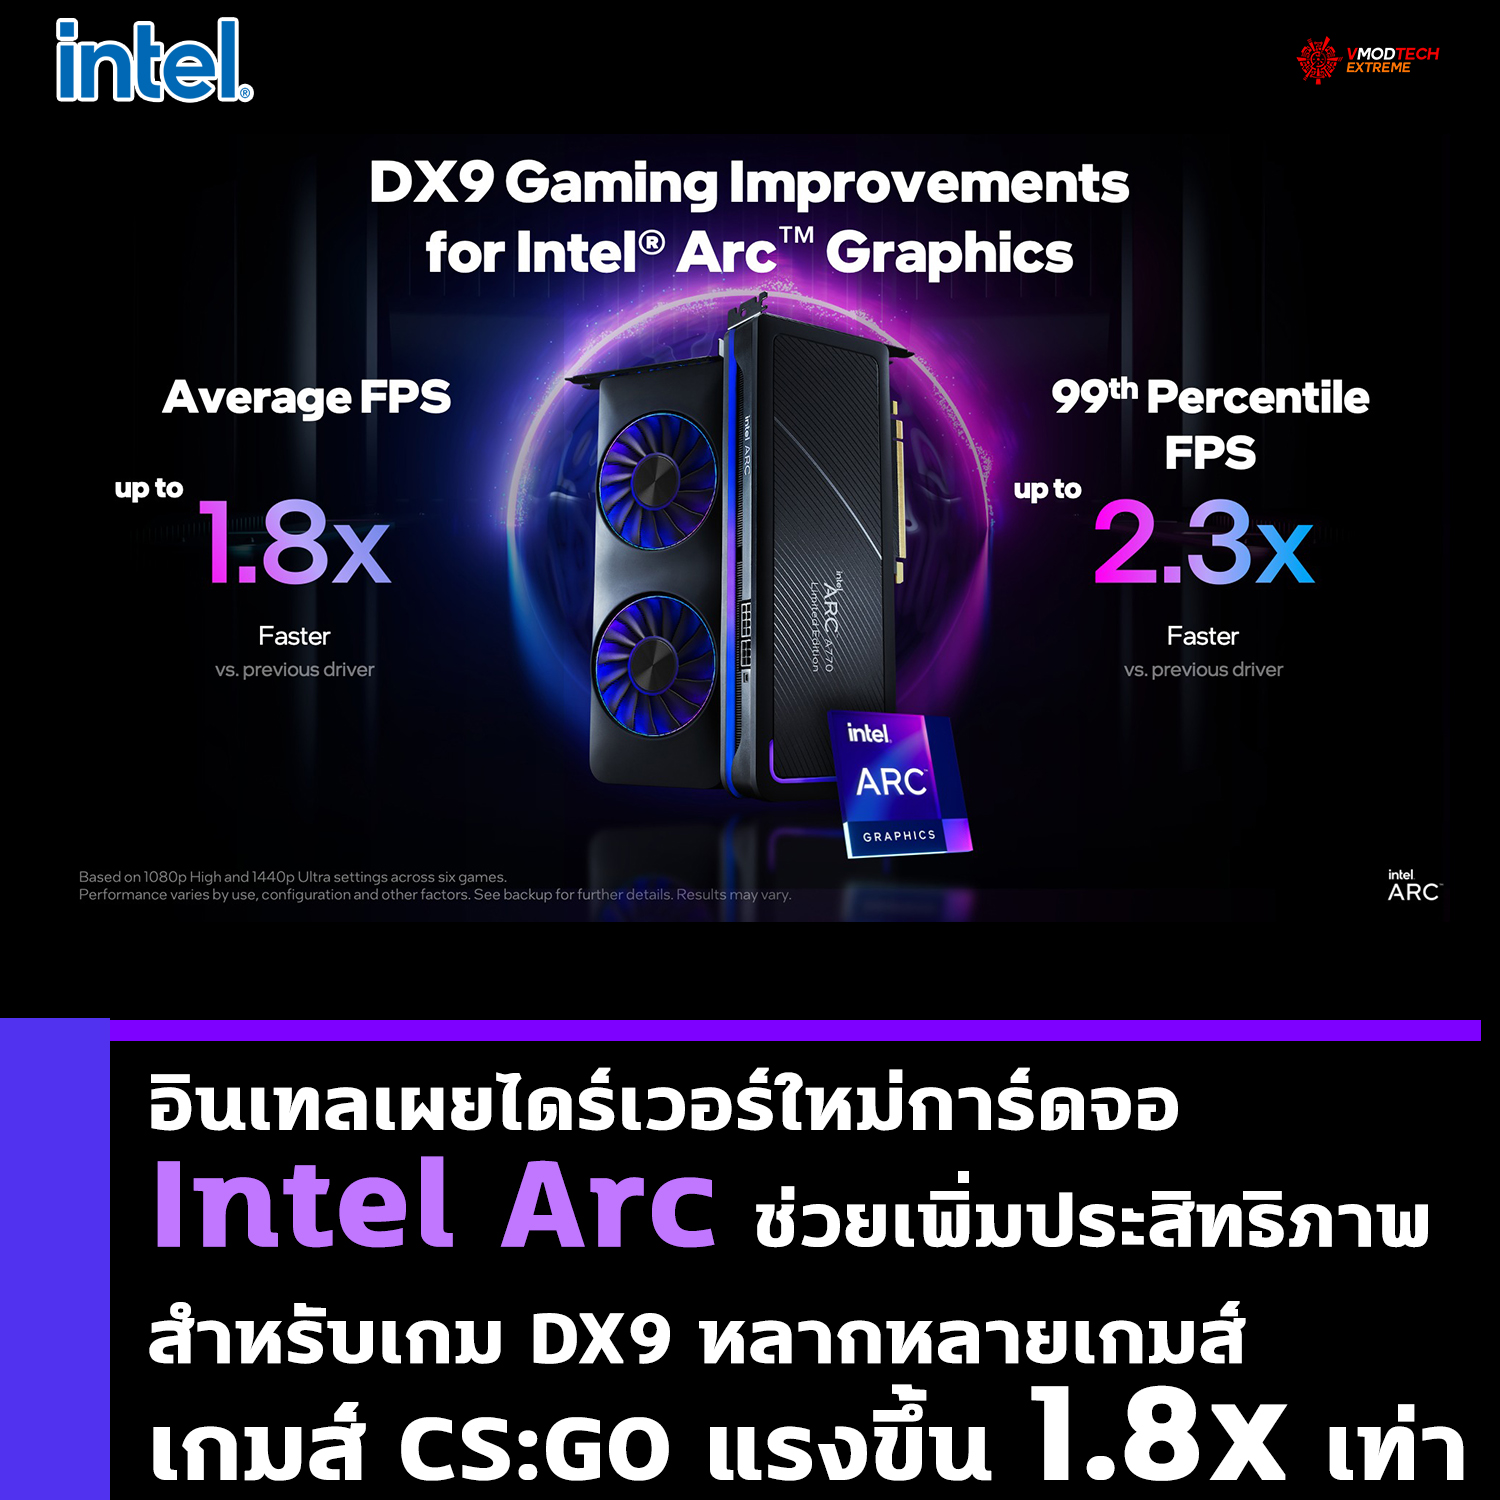 intel arc performance boost for directx 9 อินเทลเผยไดร์เวอร์ใหม่การ์ดจอ Intel Arc ช่วยเพิ่มประสิทธิภาพสำหรับเกม DX9 หลากหลายเกมส์รวมไปถึง CS:GO ที่ประสิทธิภาพแรงขึ้น 1.8x เท่า 